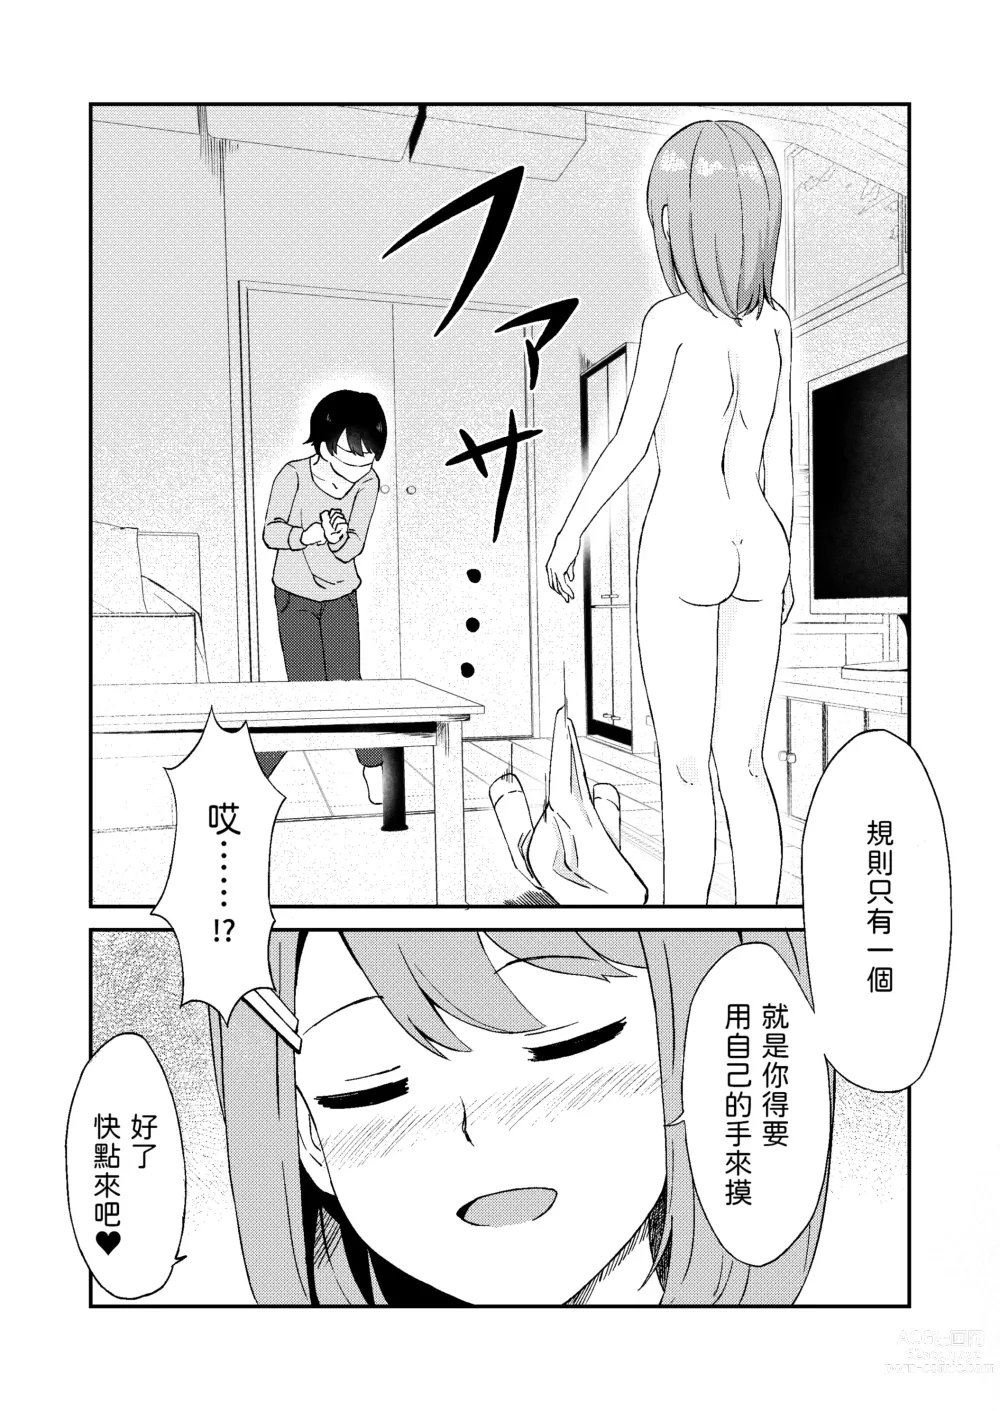 Page 11 of doujinshi Kimi ga Mienakutatte